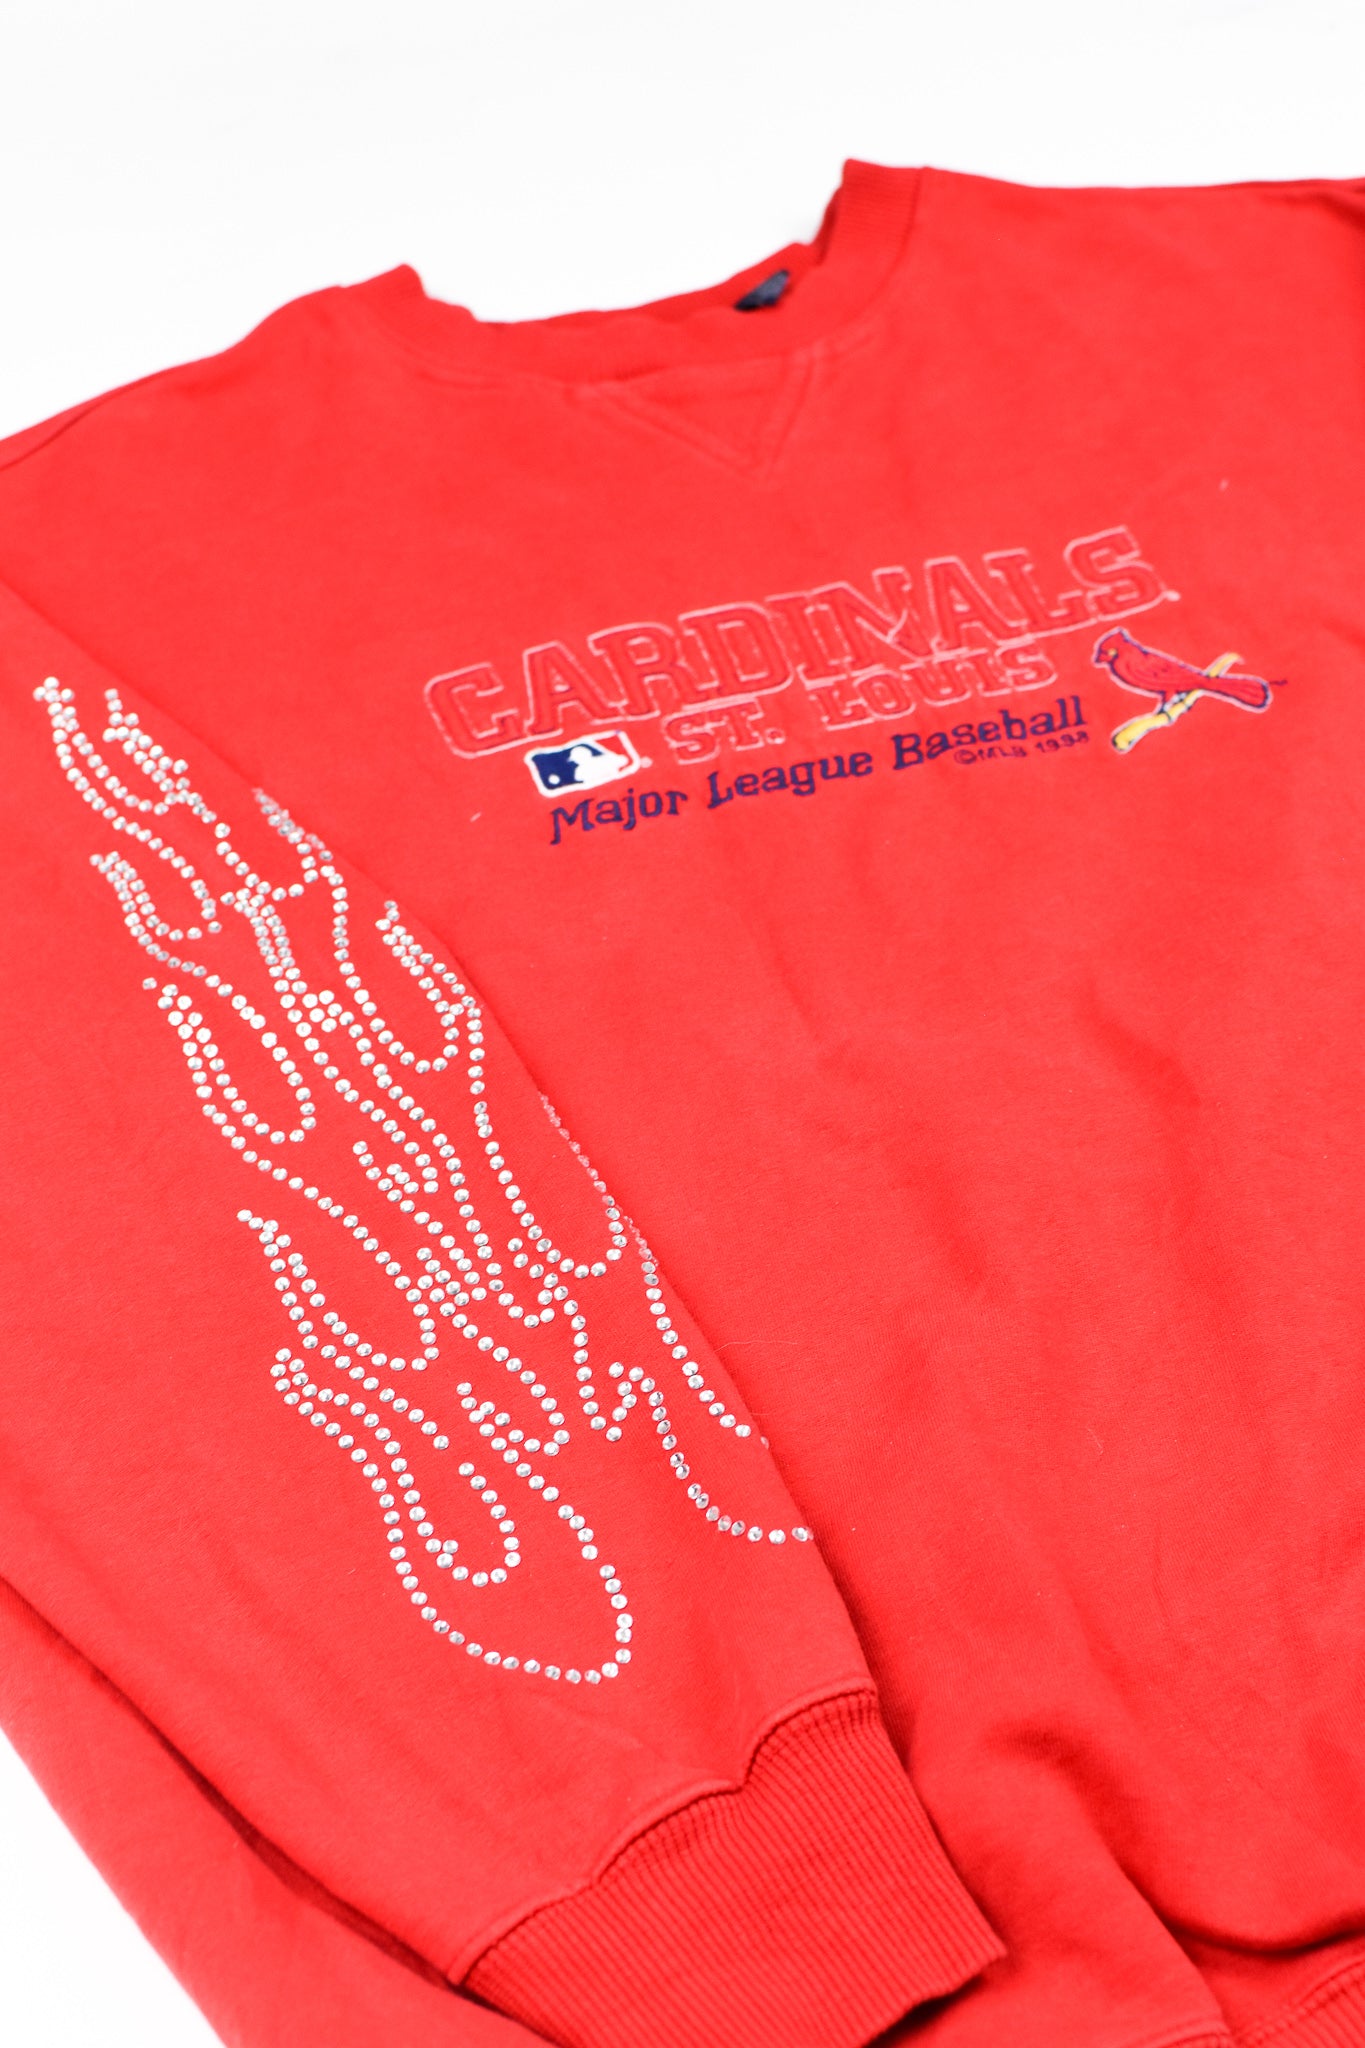 Upcycled Vintage Cardinals Flame Sweatshirt